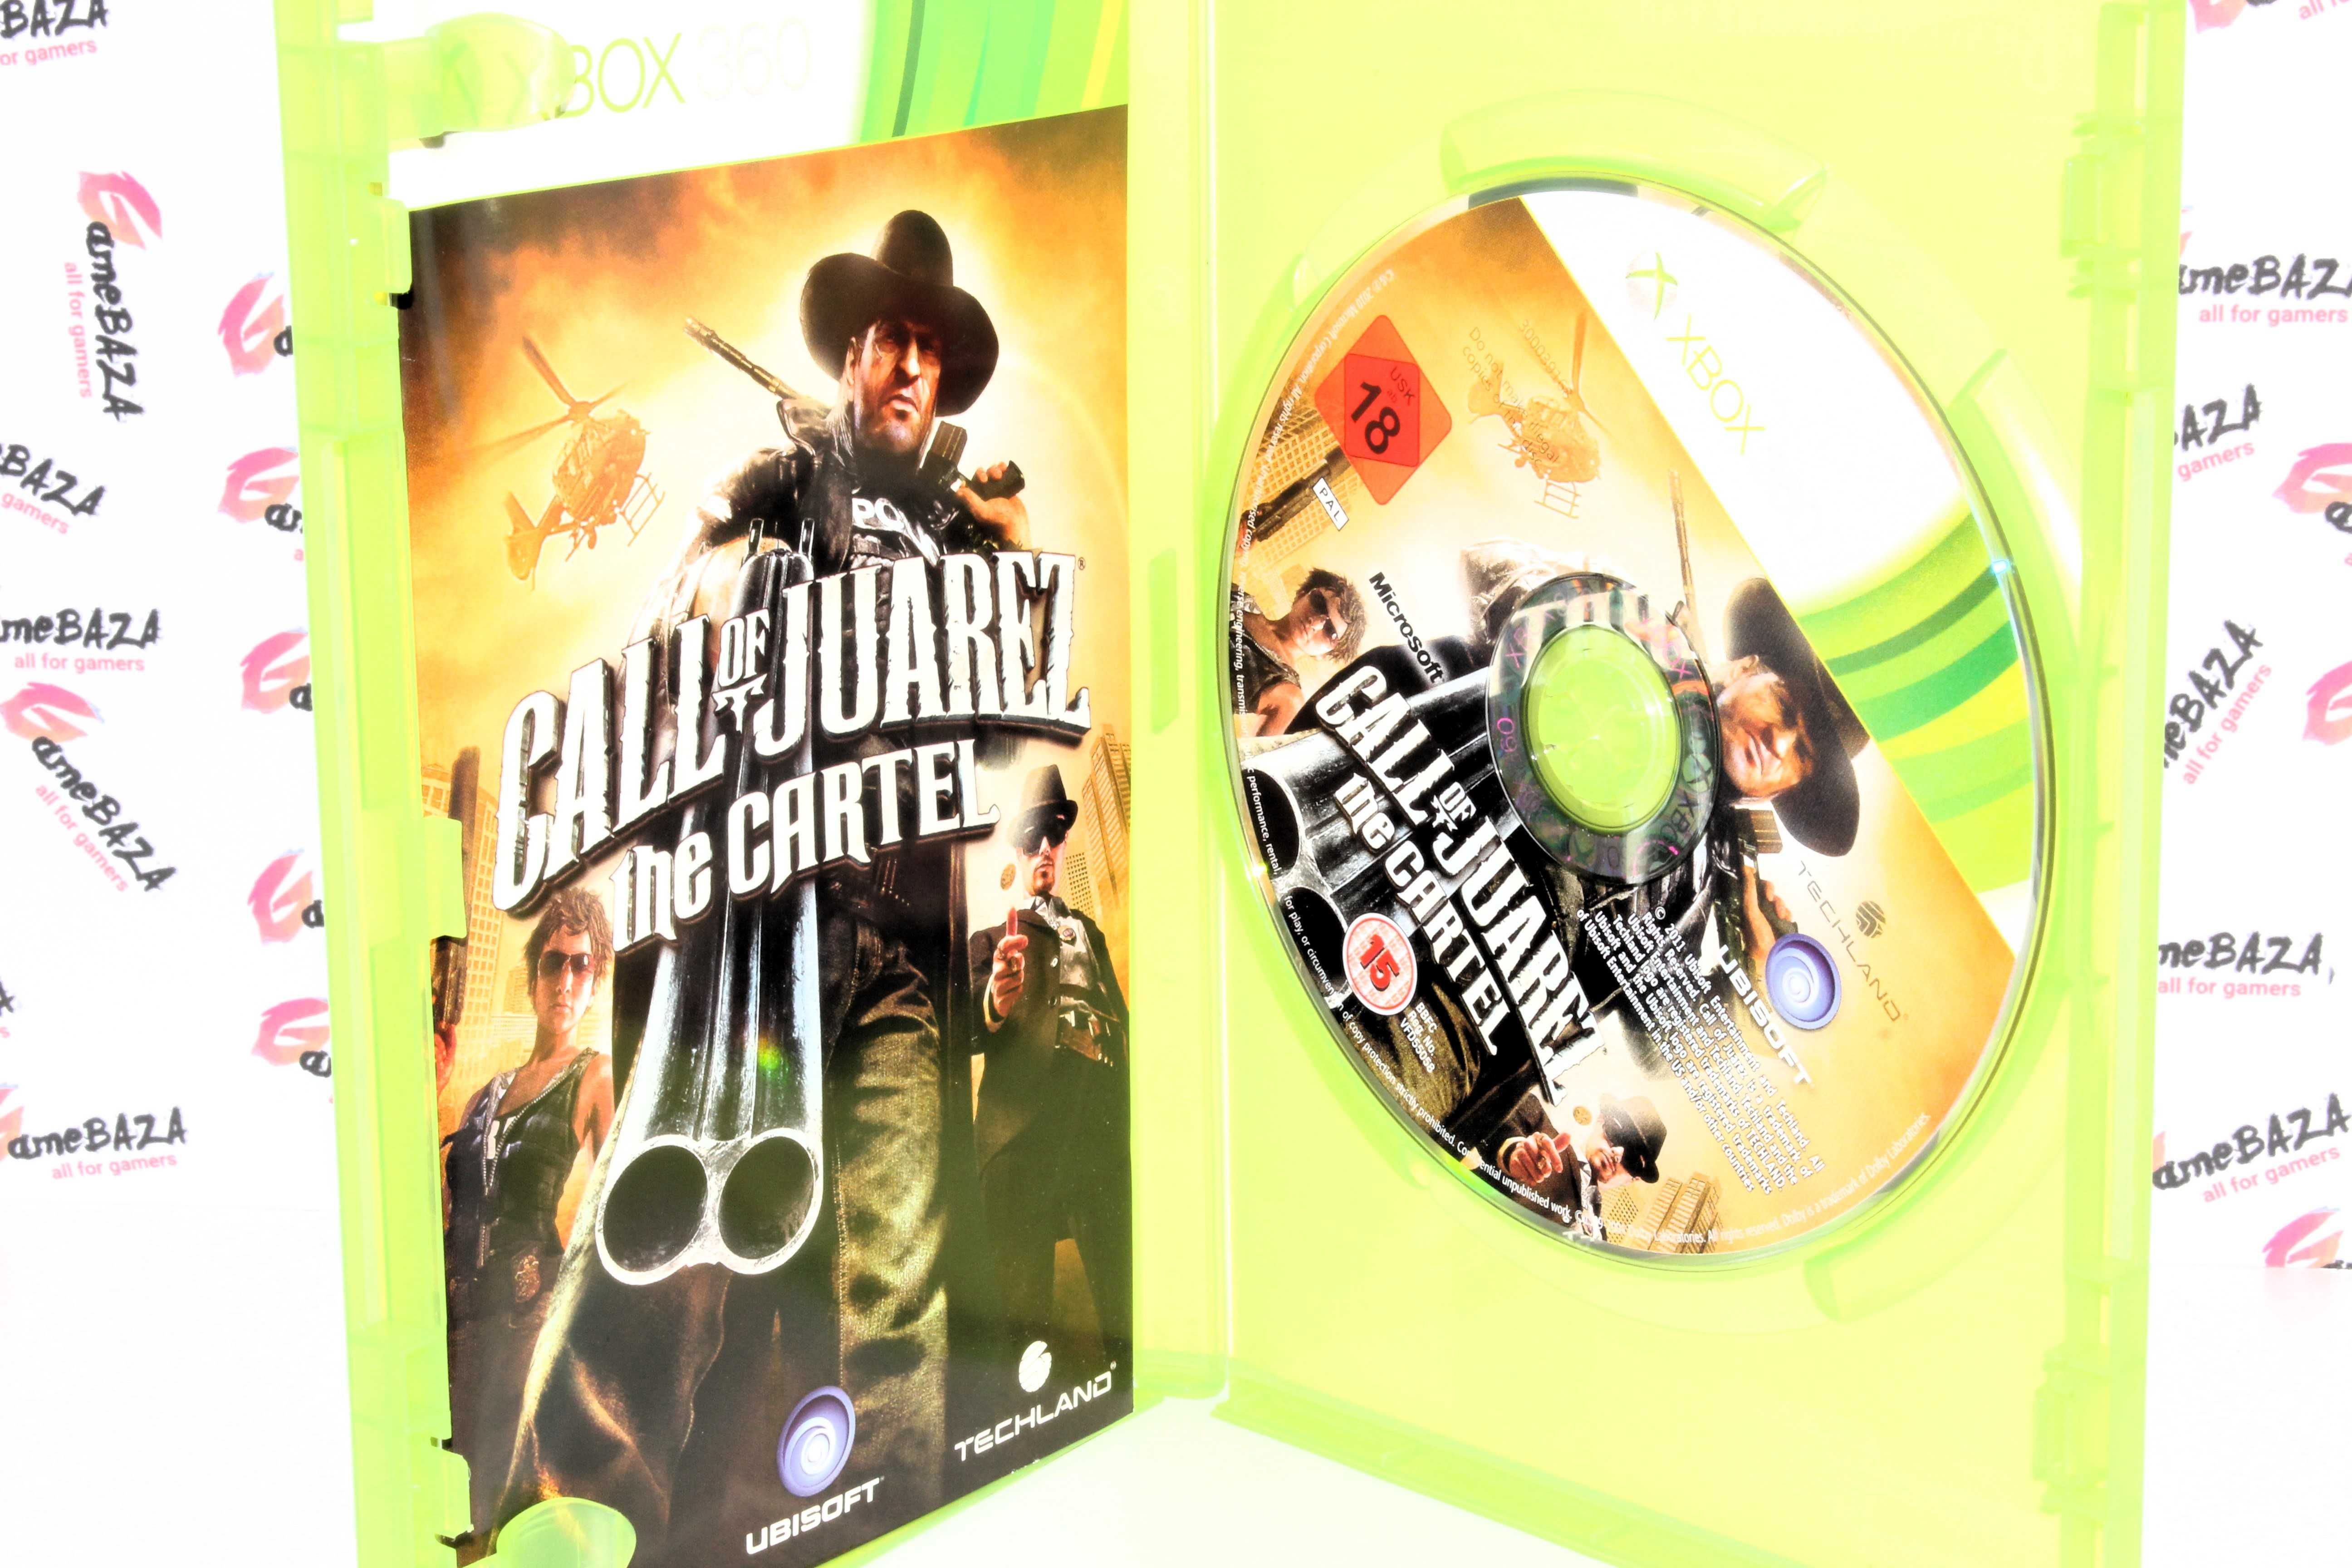 Call of Juarez: The Cartel Xbox 360 PL GameBAZA